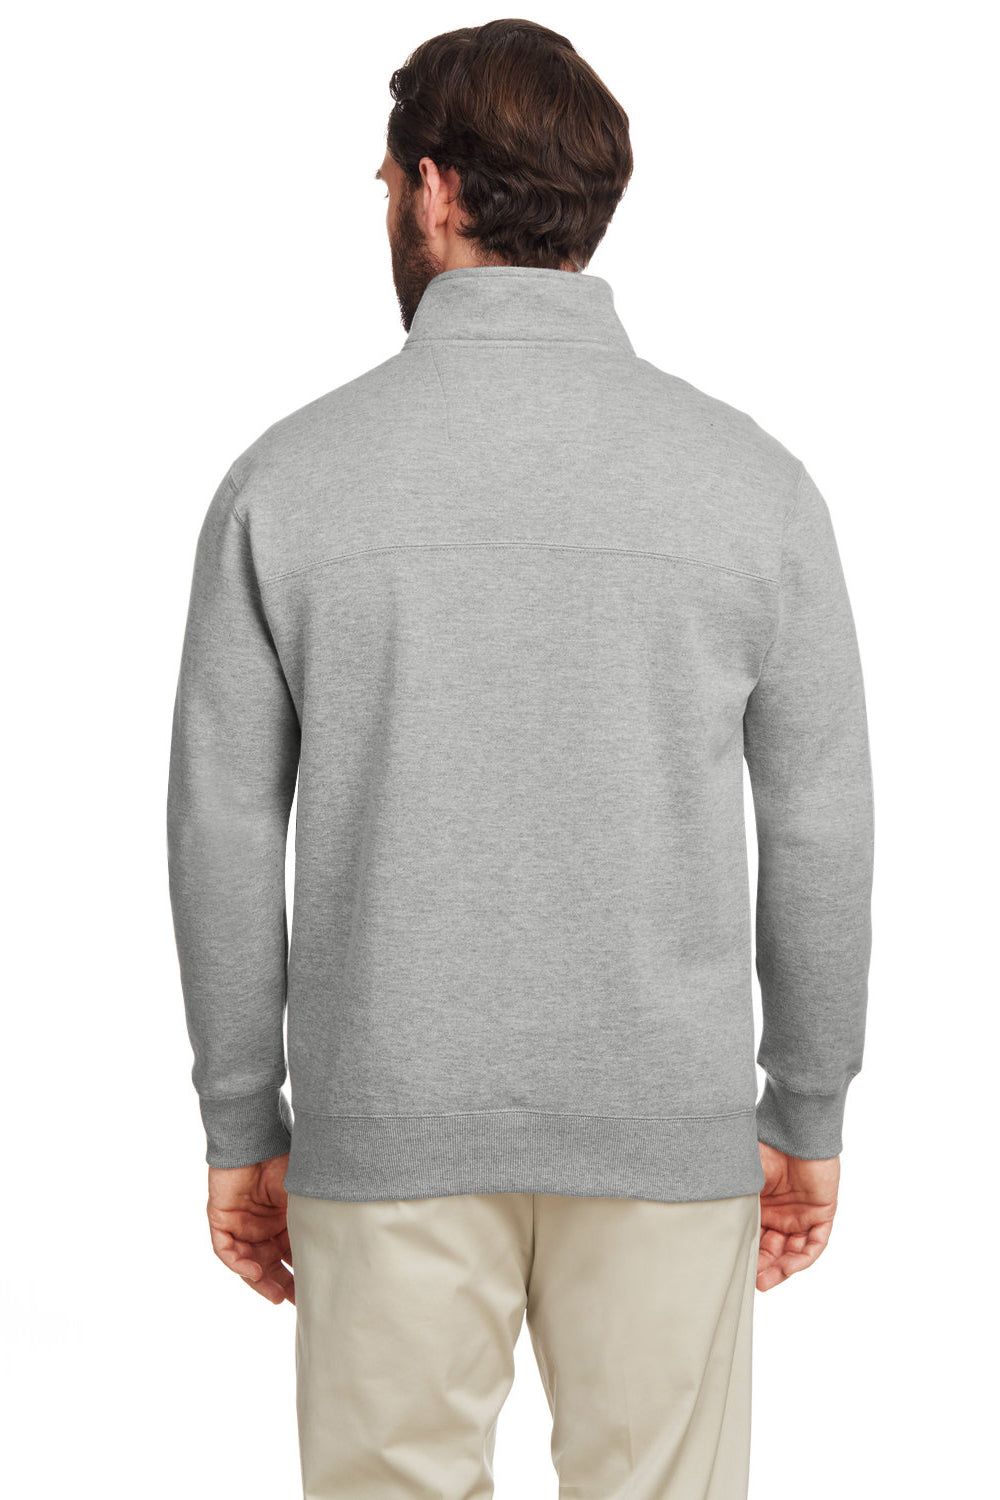 Nautica N17176 Mens Anchor 1/4 Zip Sweatshirt Oxford Grey Back